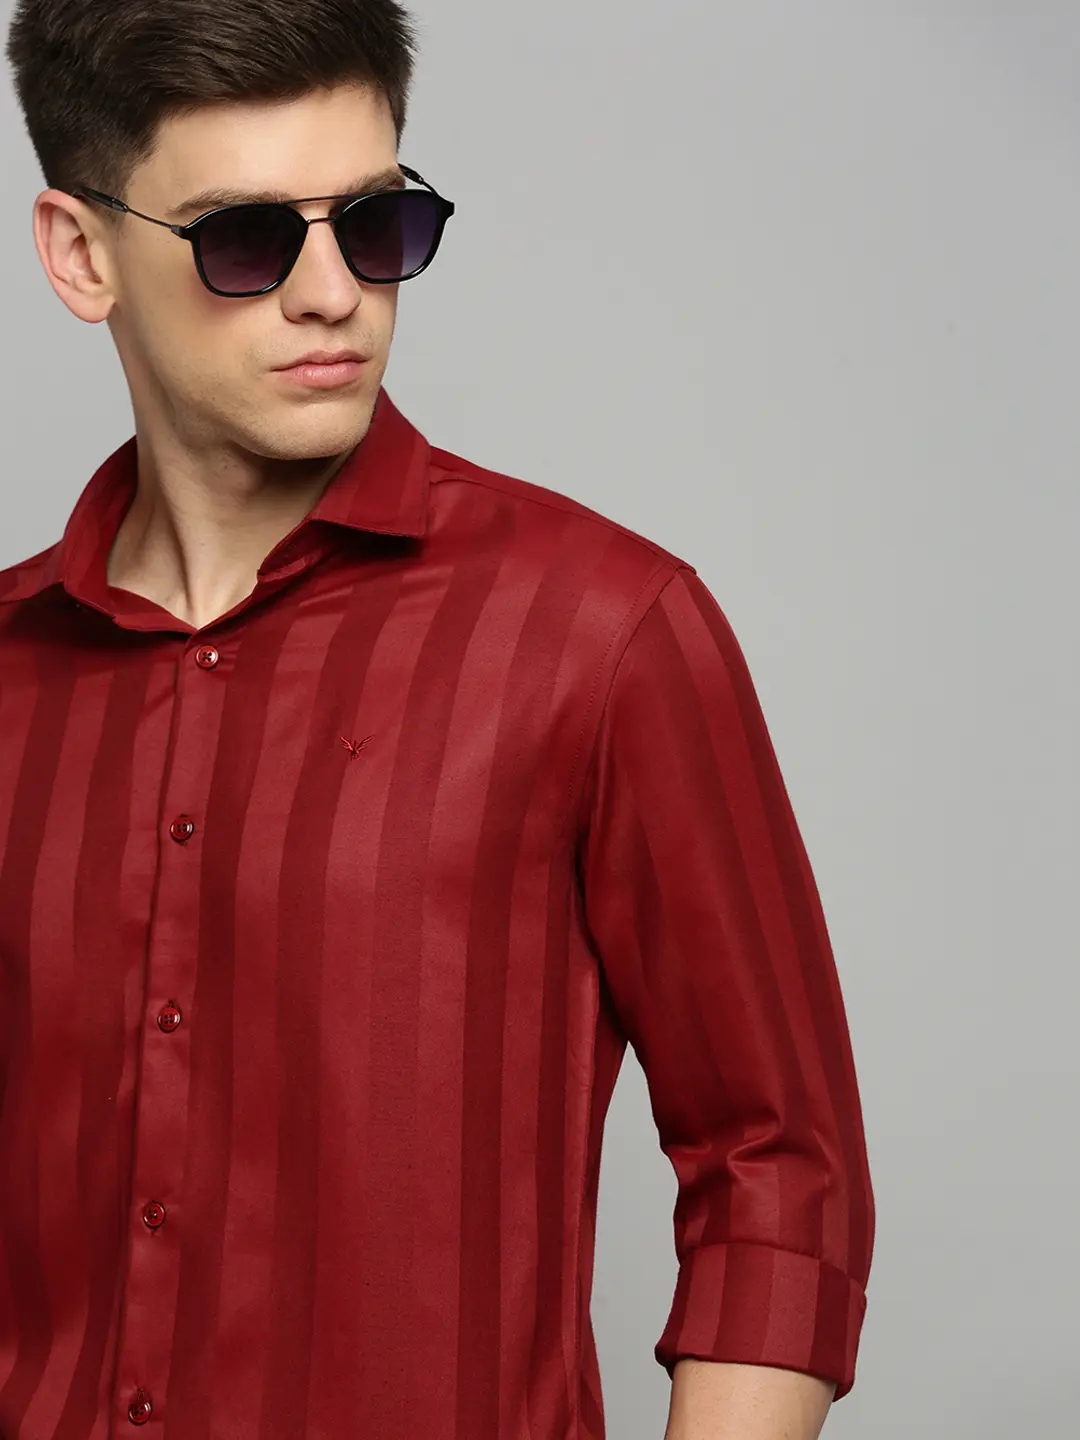 SHOWOFF Men's Spread Collar Solid Maroon Classic Shirt